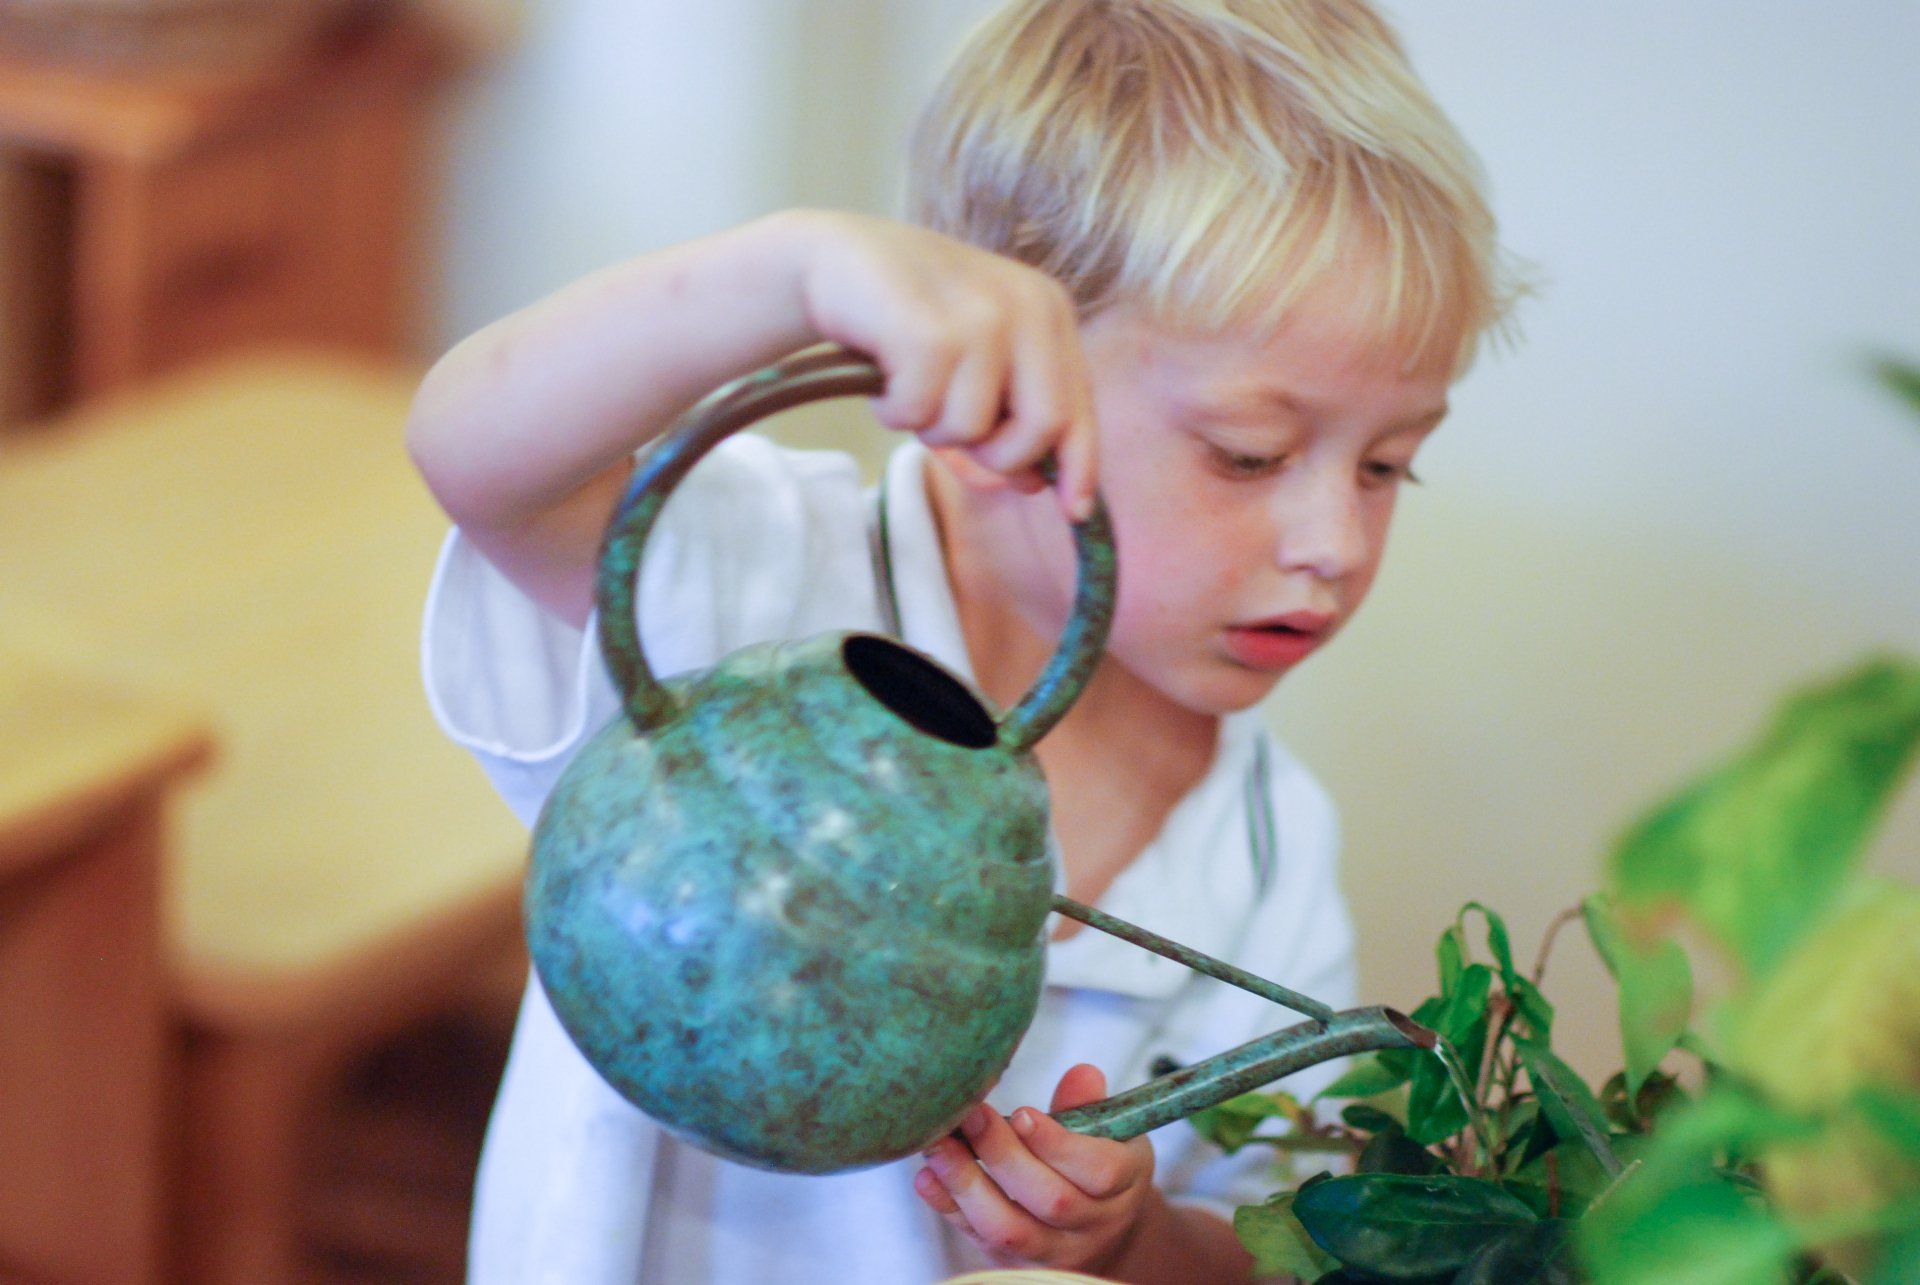 Child watering plants